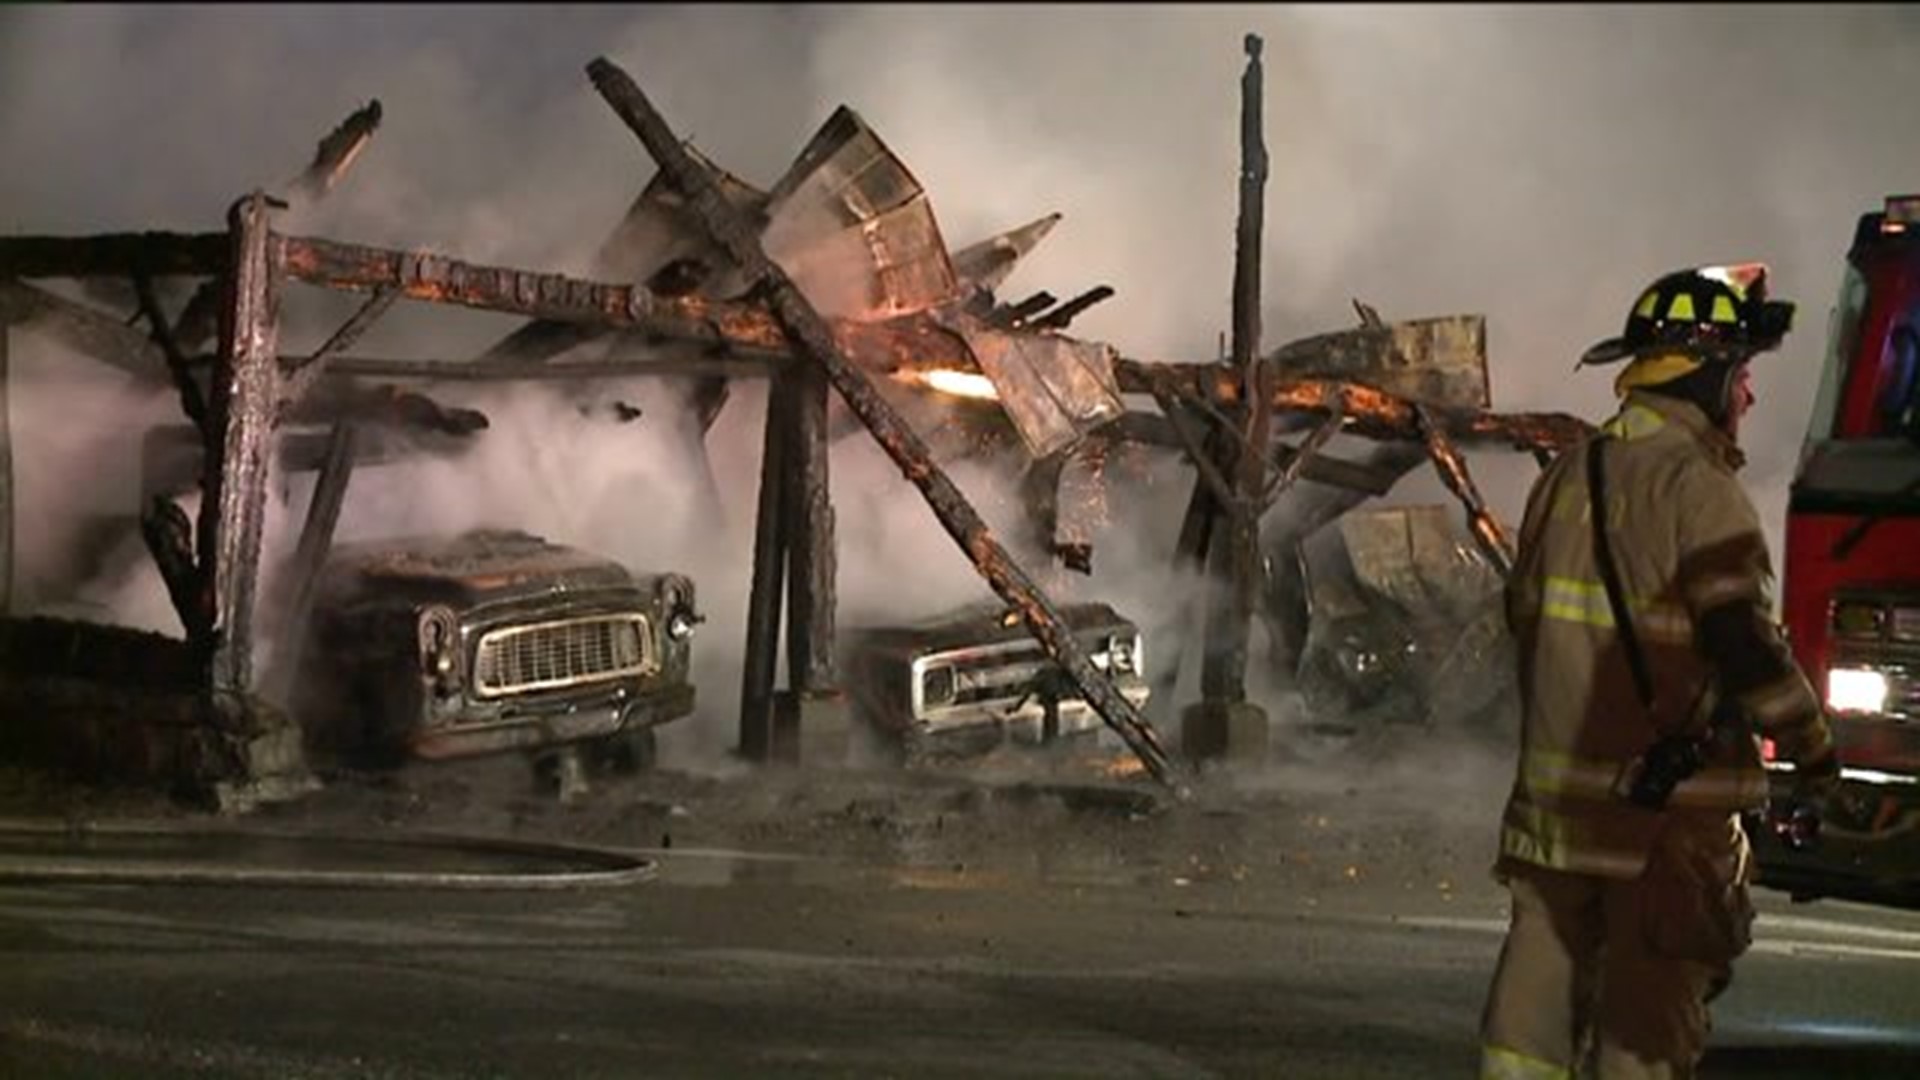 Antique Trucks Destroyed in Fire